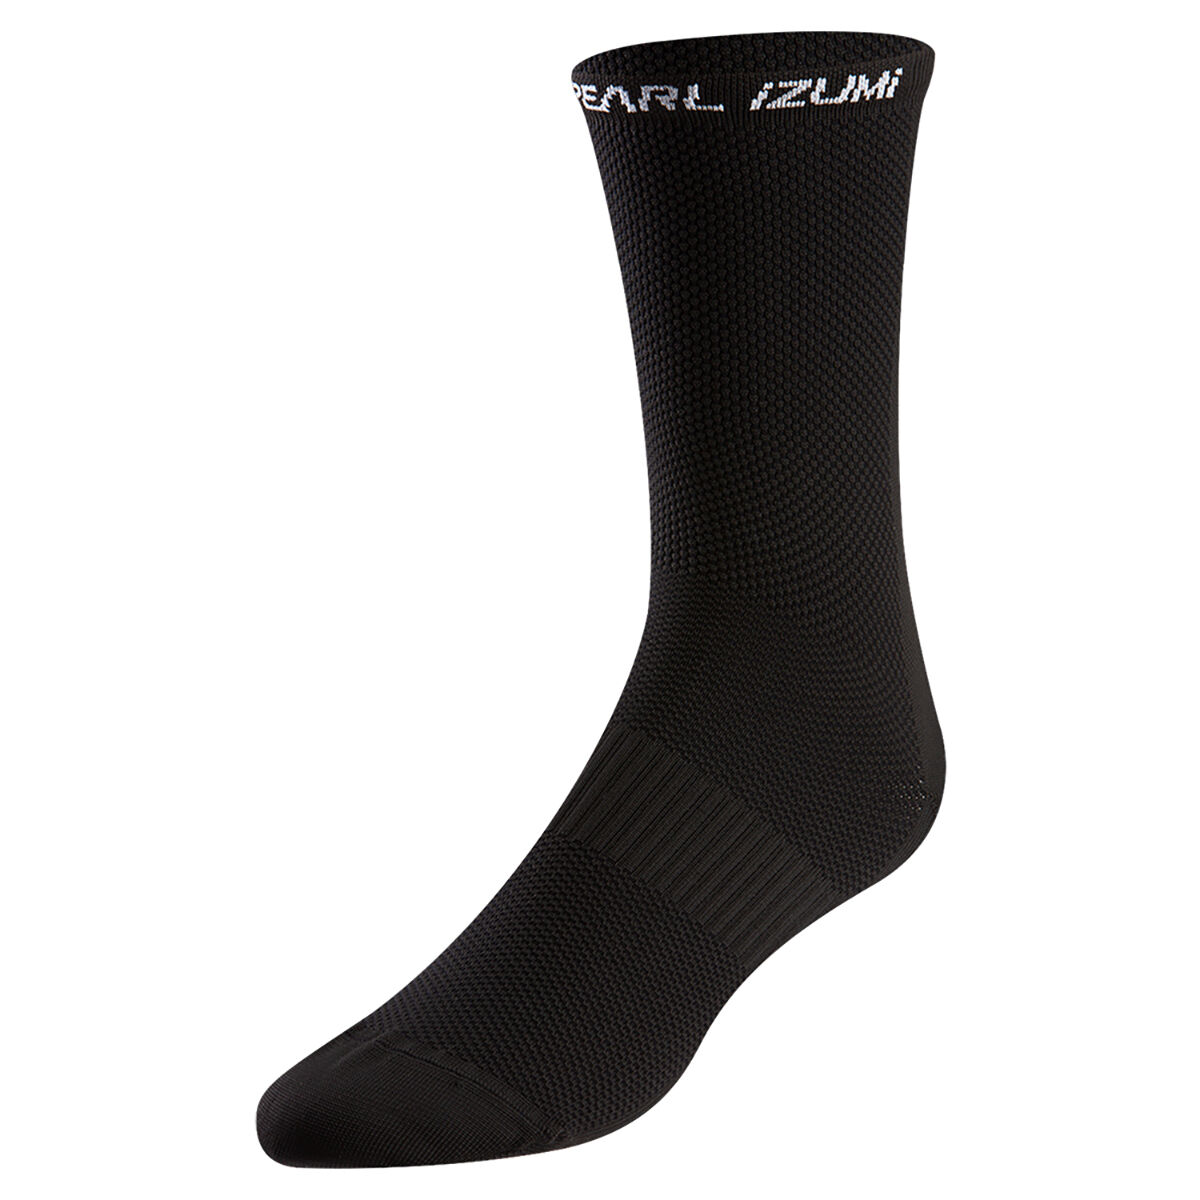 Pearl Izumi Elite Hautes - Cycling socks - Men's